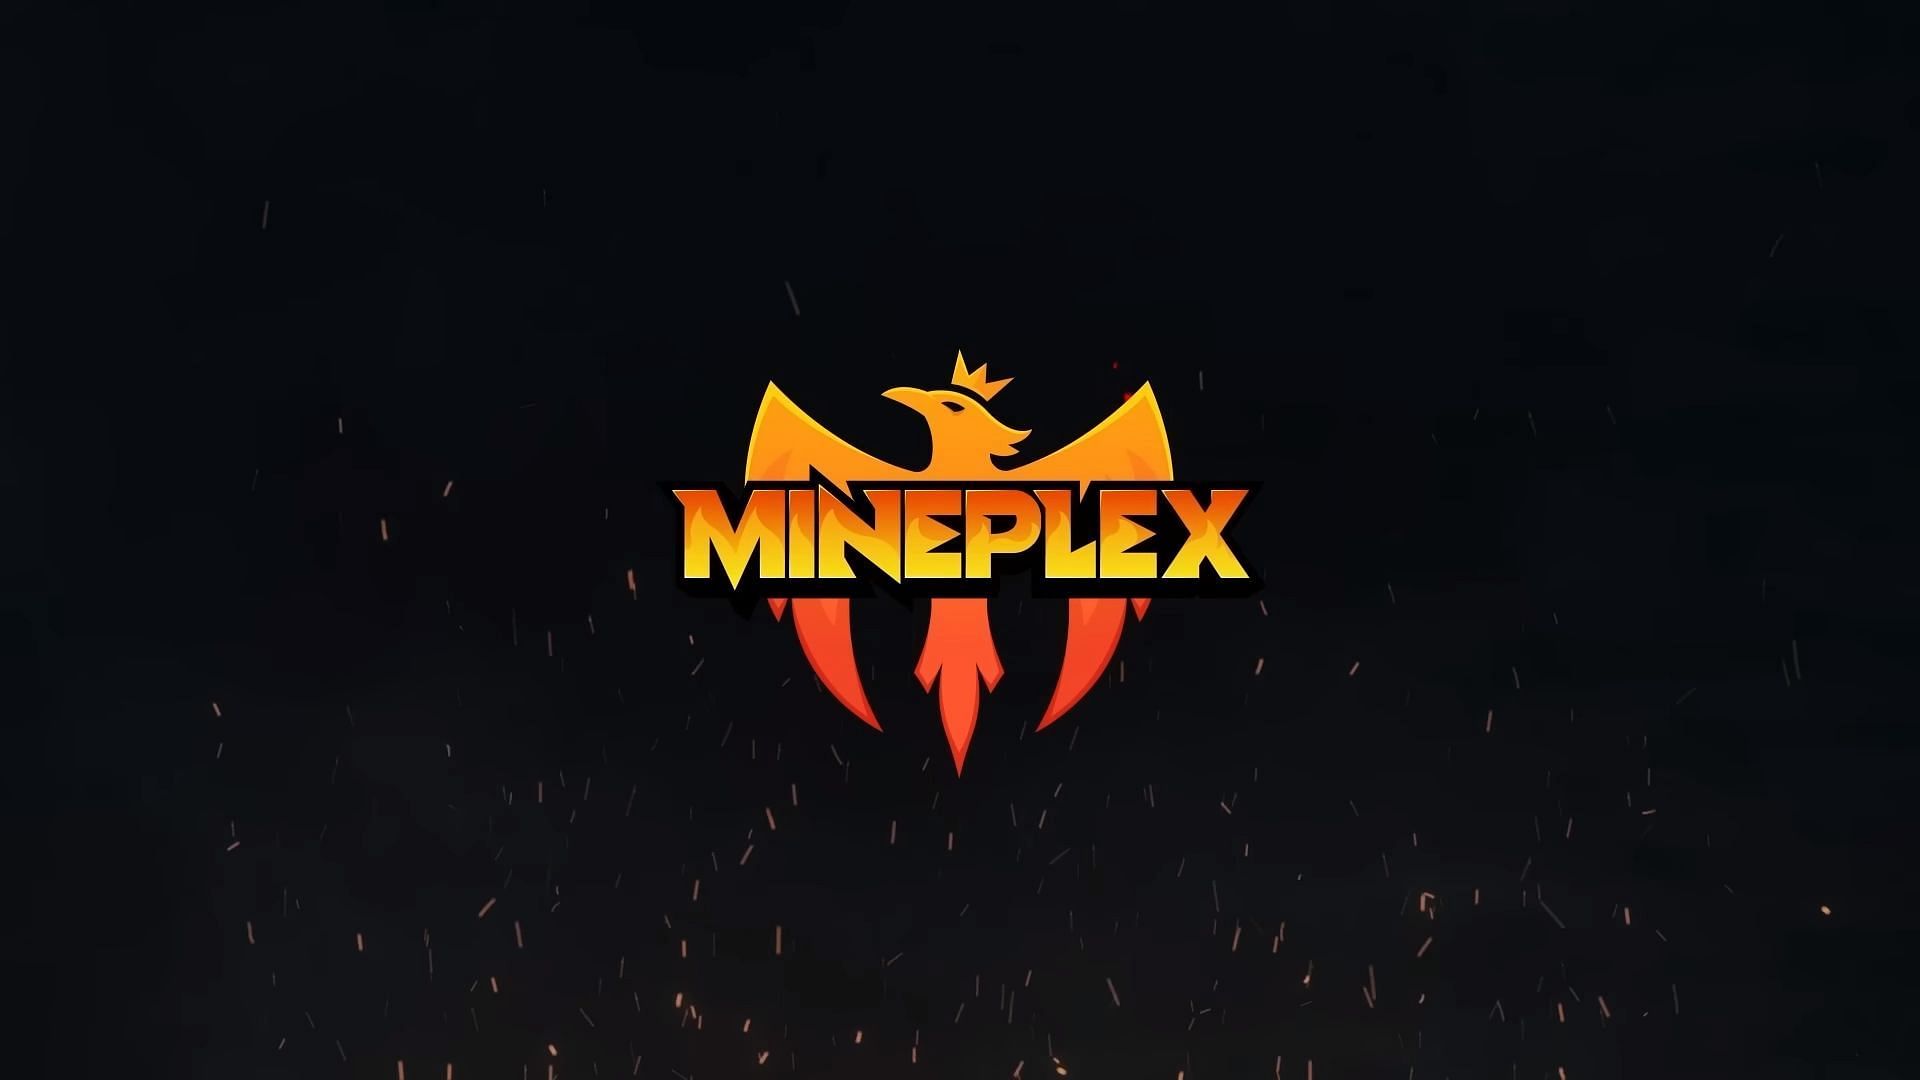 Mineplex is bringing back their Minecraft servers (Image via Mineplex)